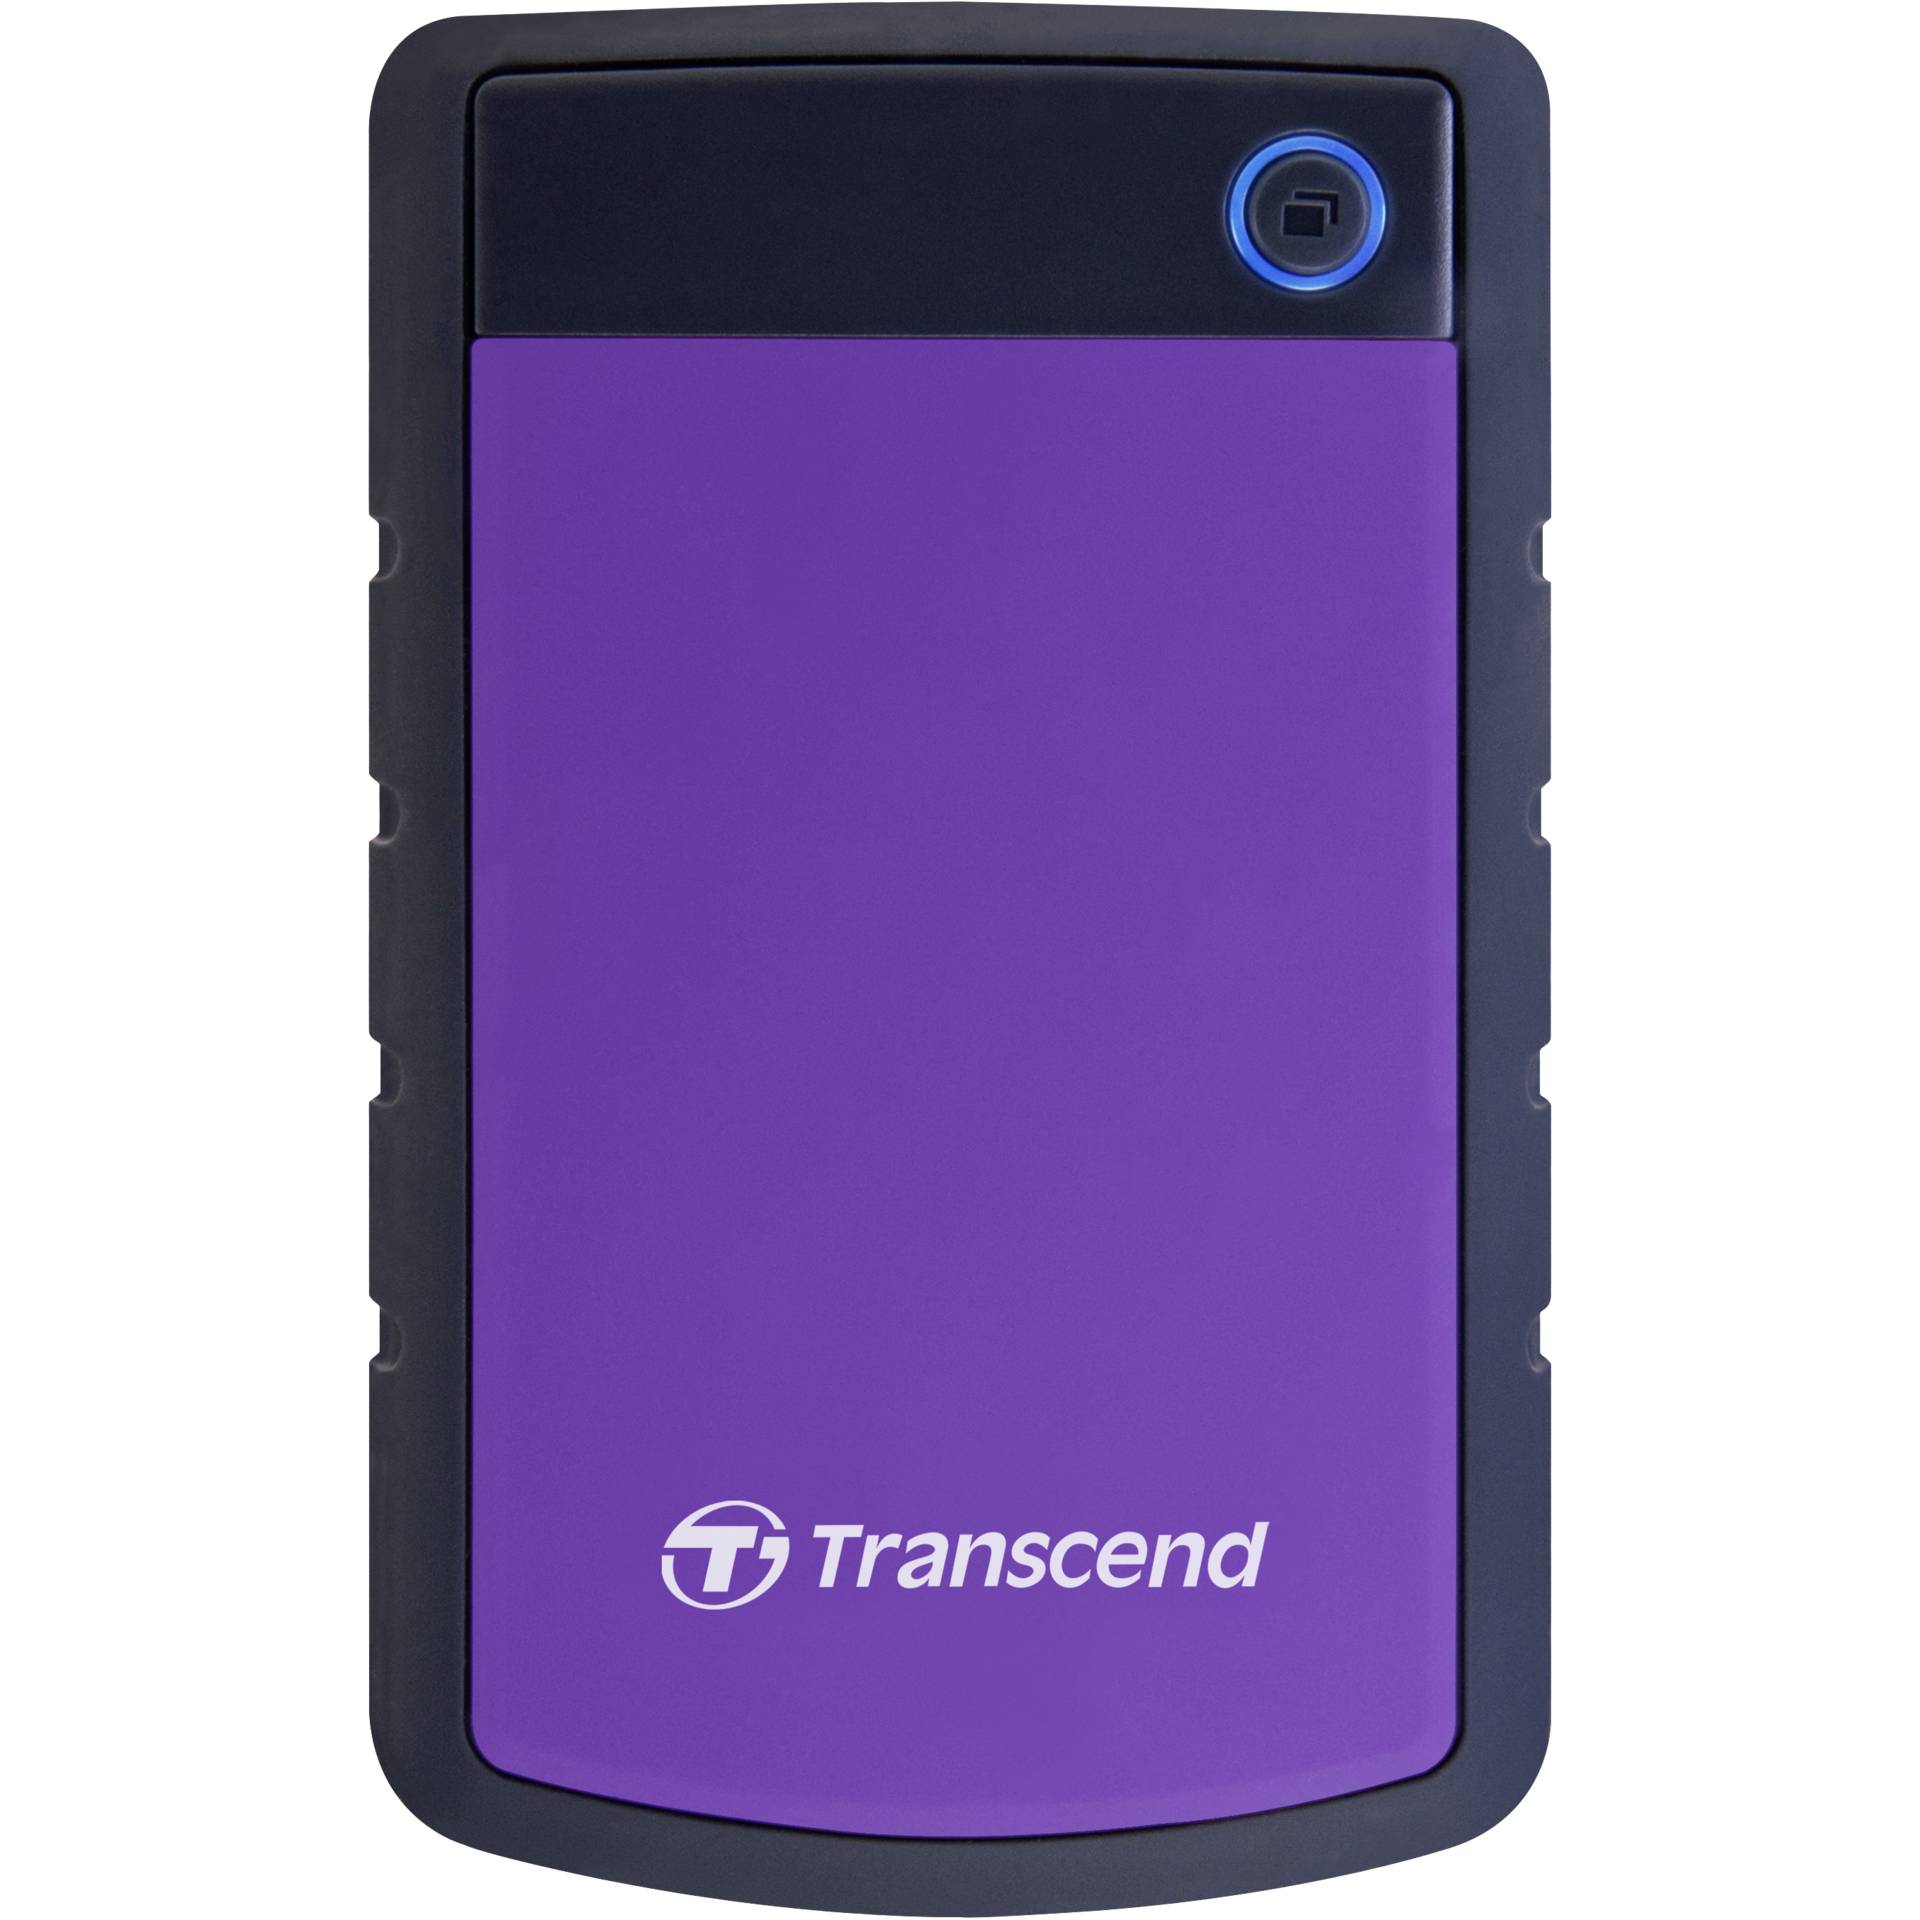 Transcend StoreJet 25H3P     4TB 2,5  USB 3.0